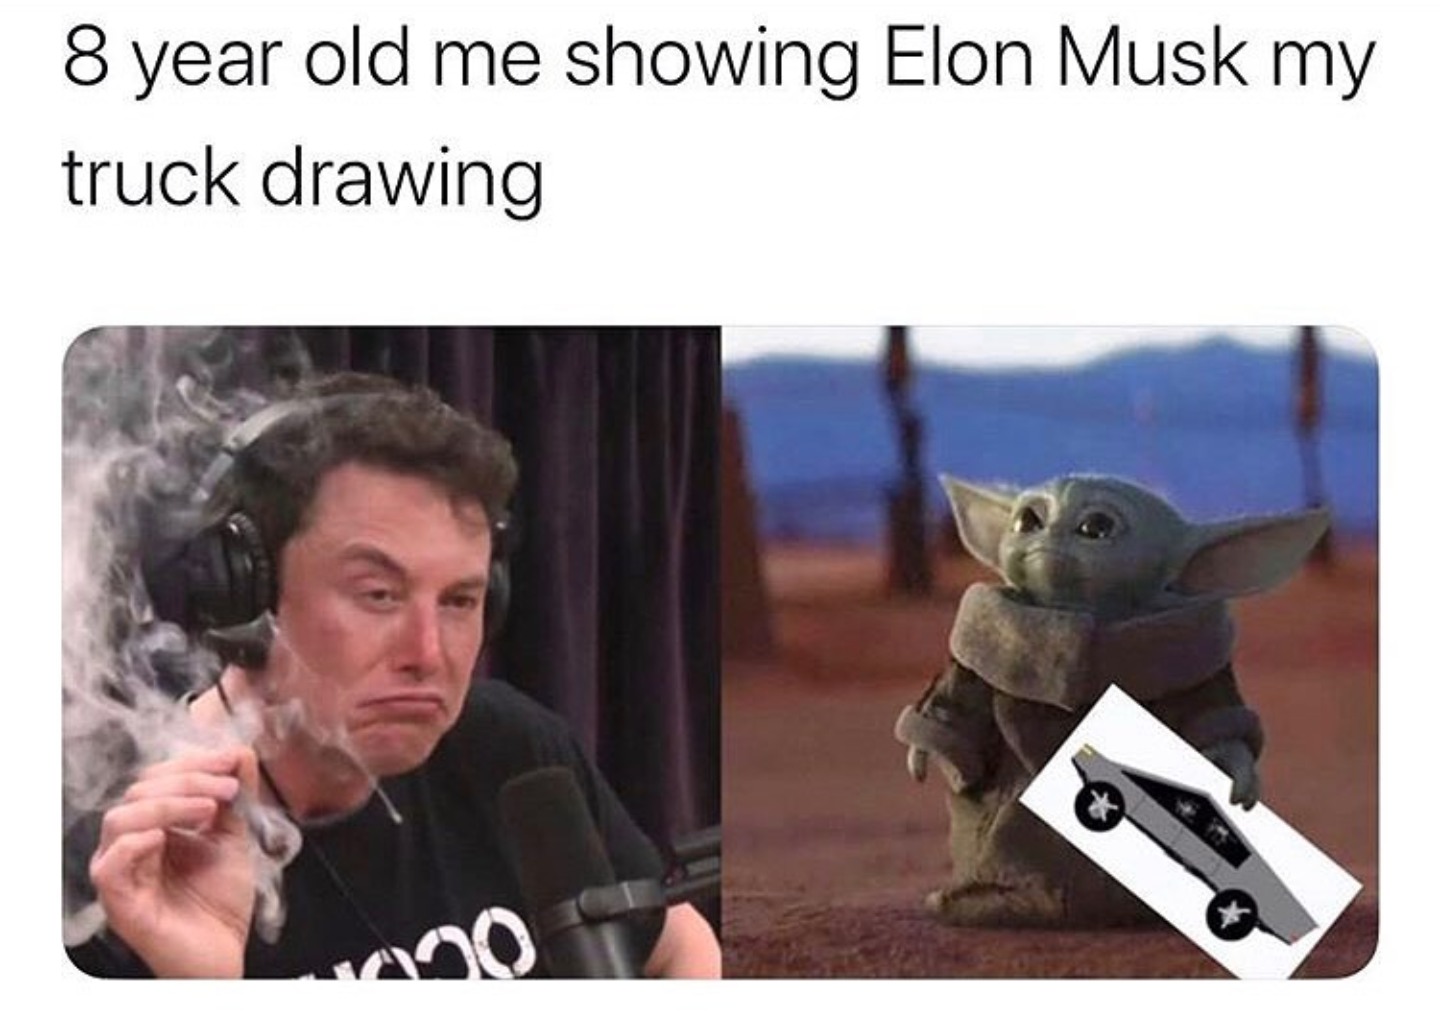 8 year old me showing Elon Musk my truck drawing - Baby Yoda - Tesla Cybertruck.